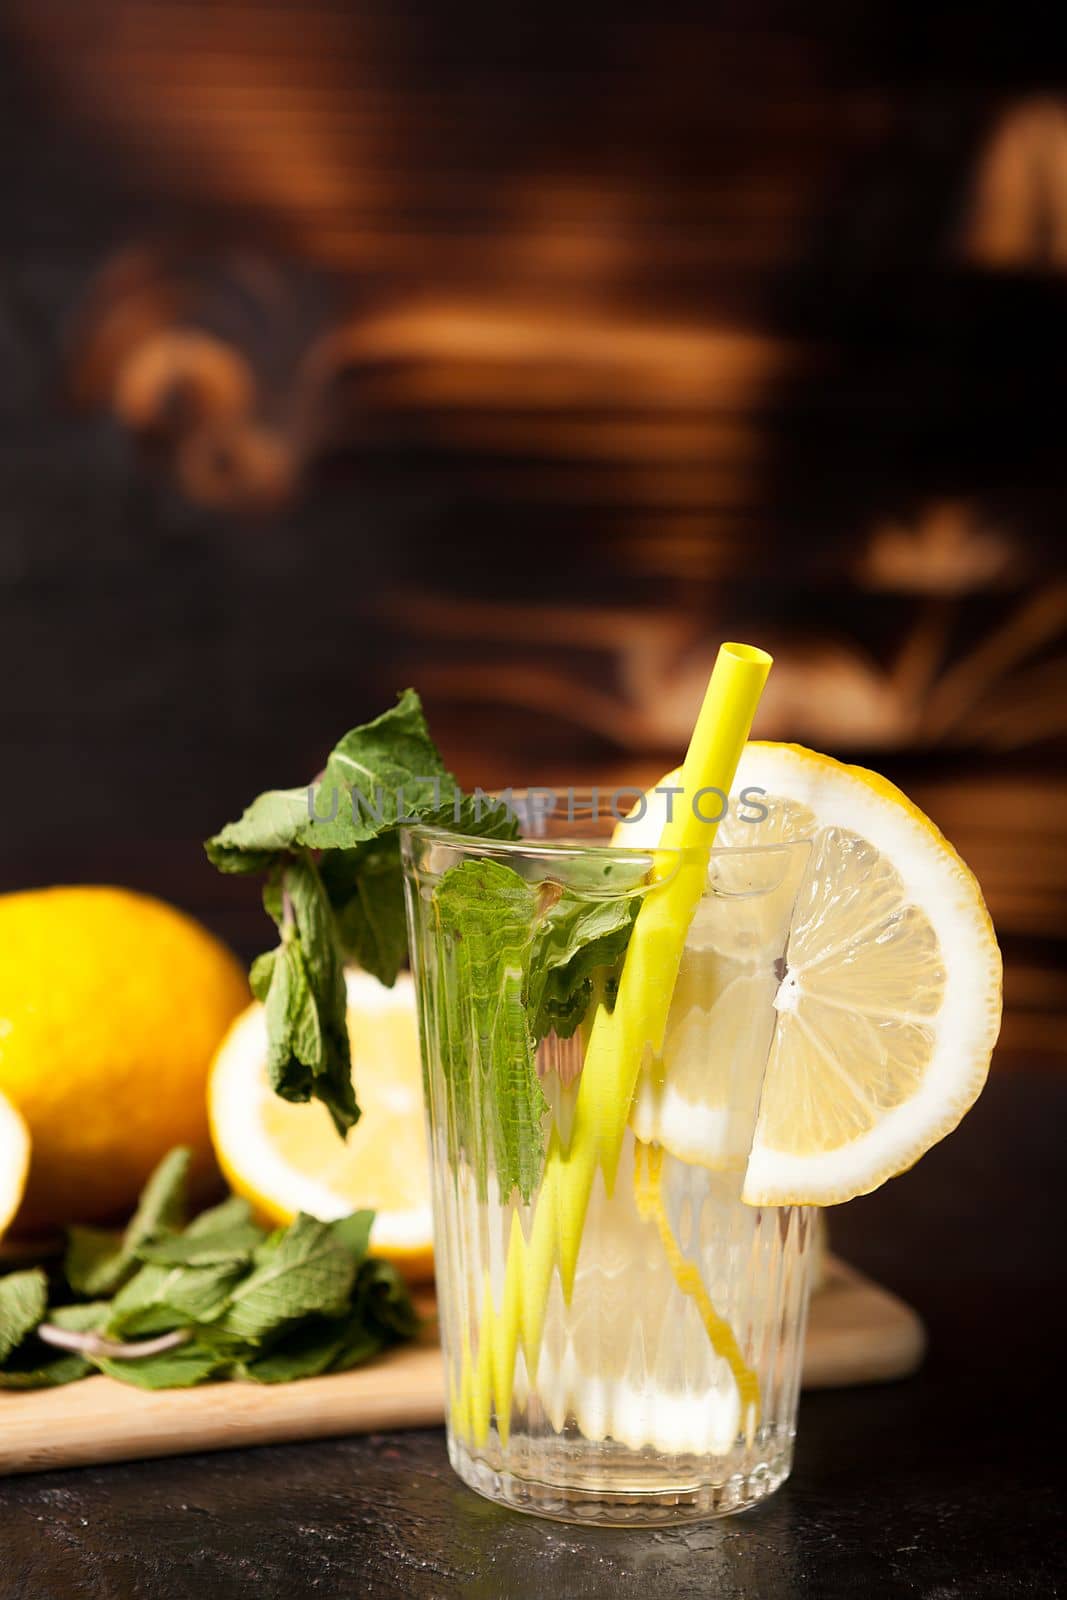 Natural lemonade made of organic lemons and mint by DCStudio